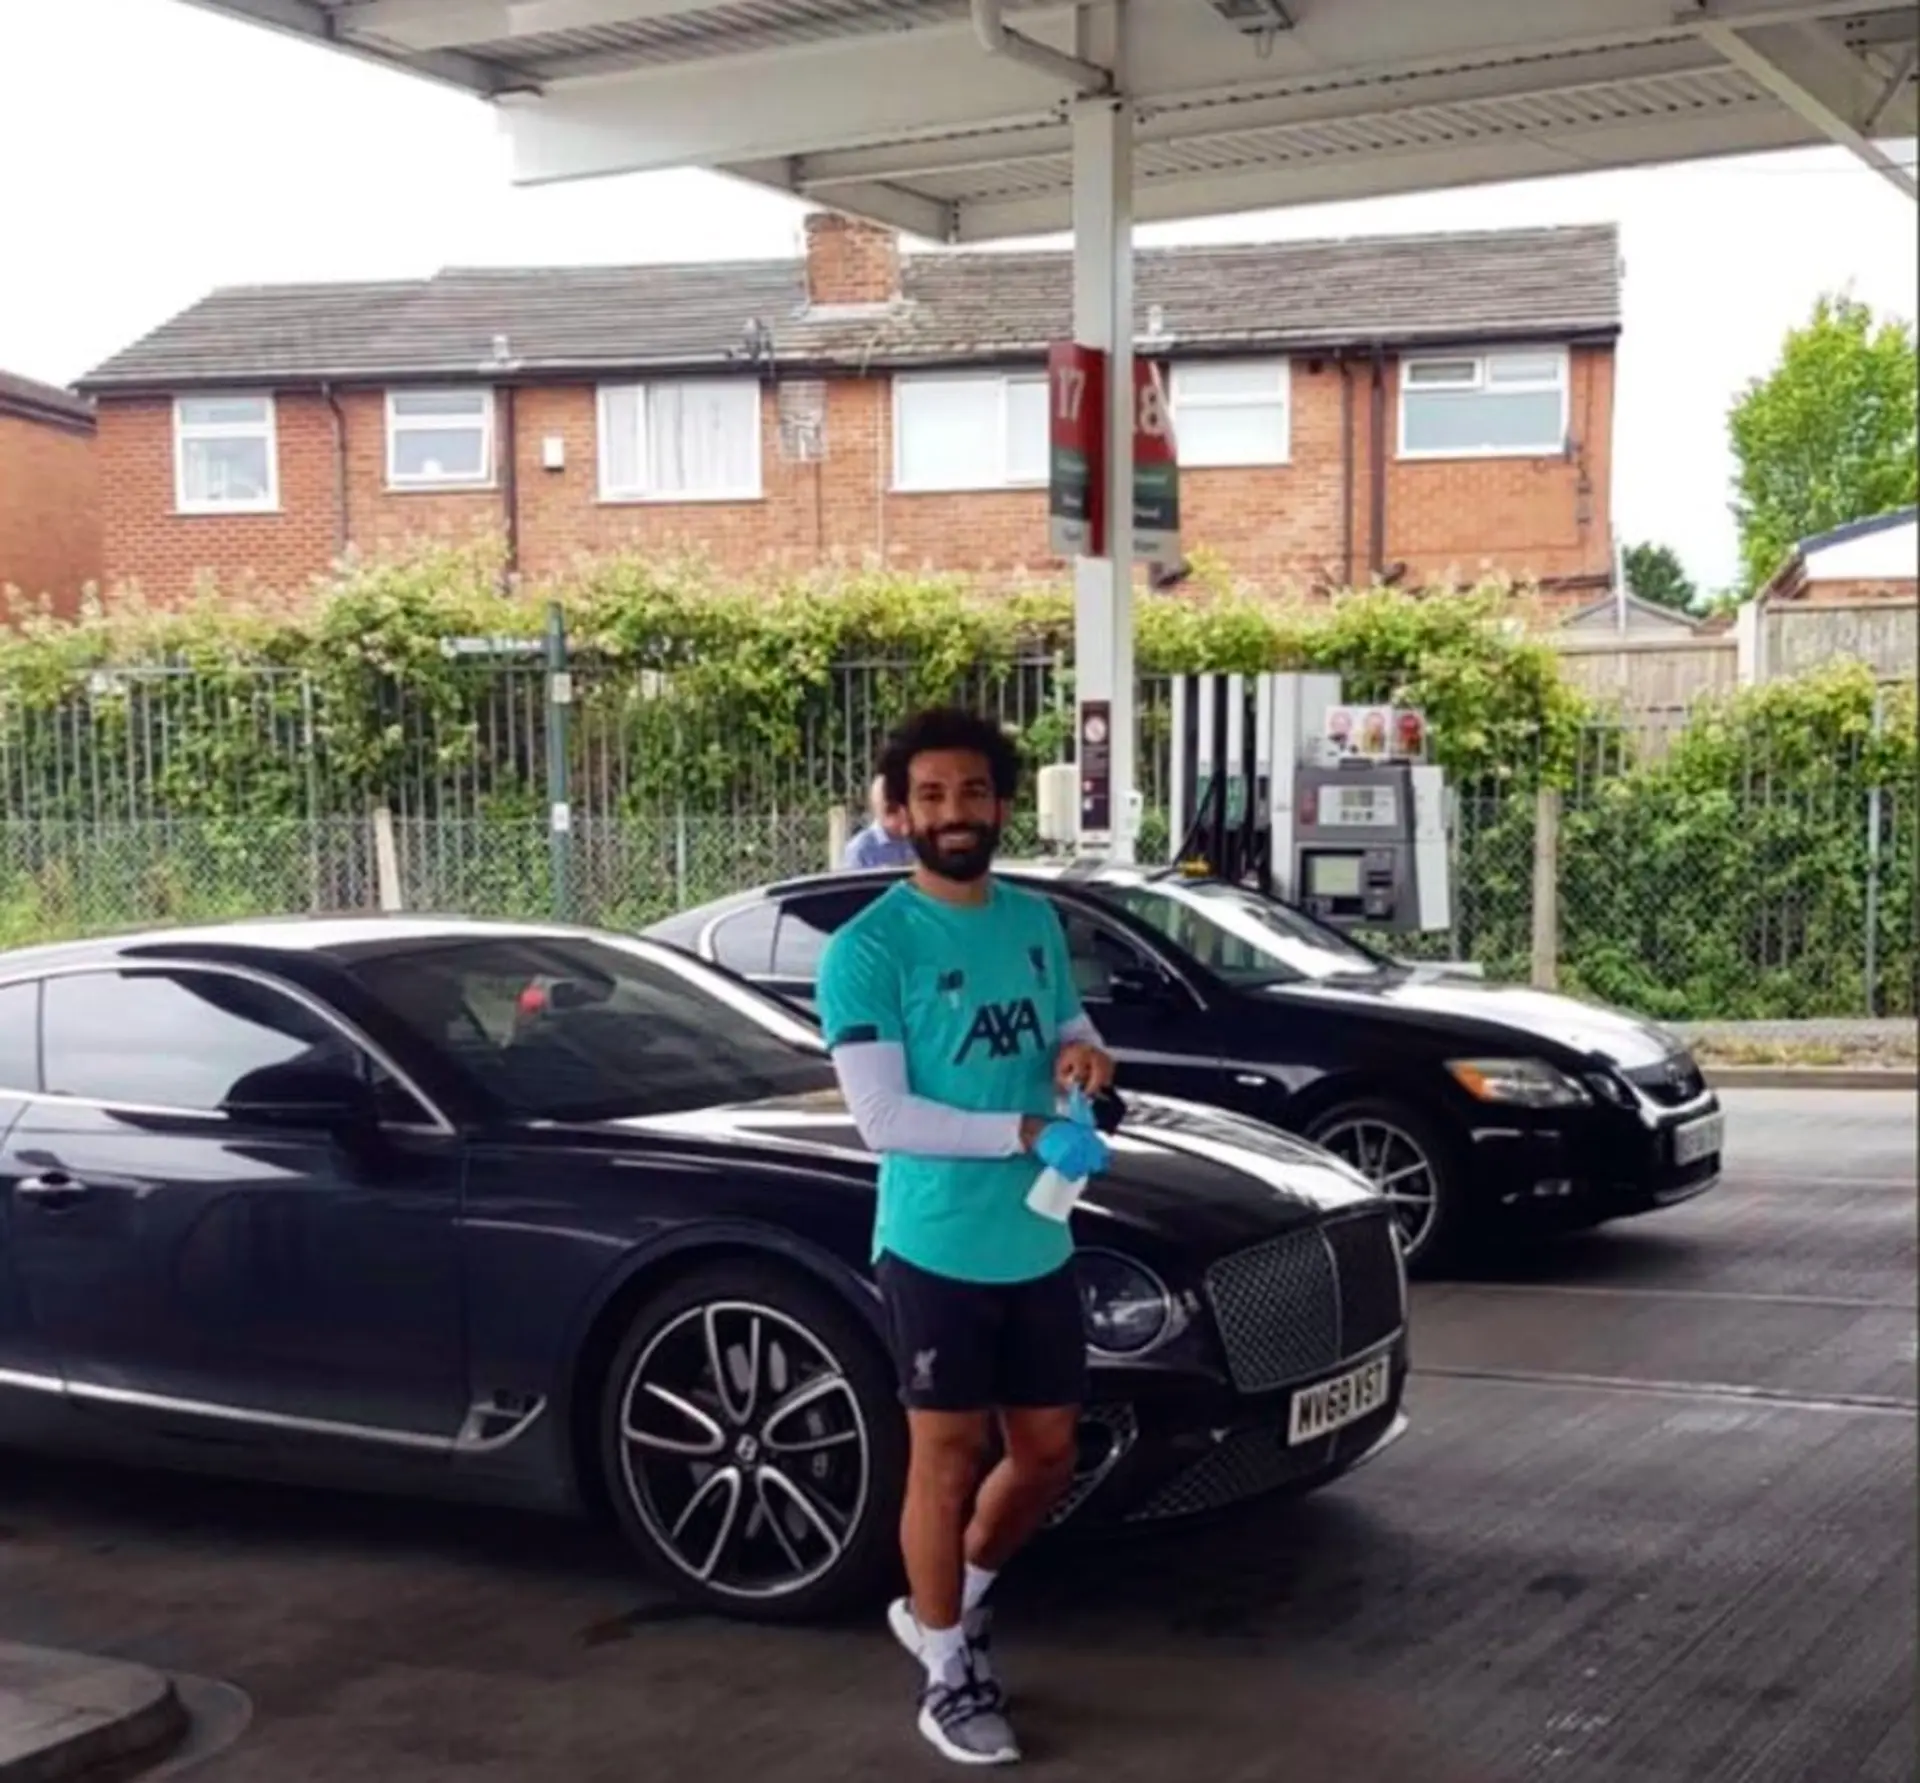 Mo Salah just casually paying for everyone’s petrol at Sainsbury’s, Old Swan, in a full training kit